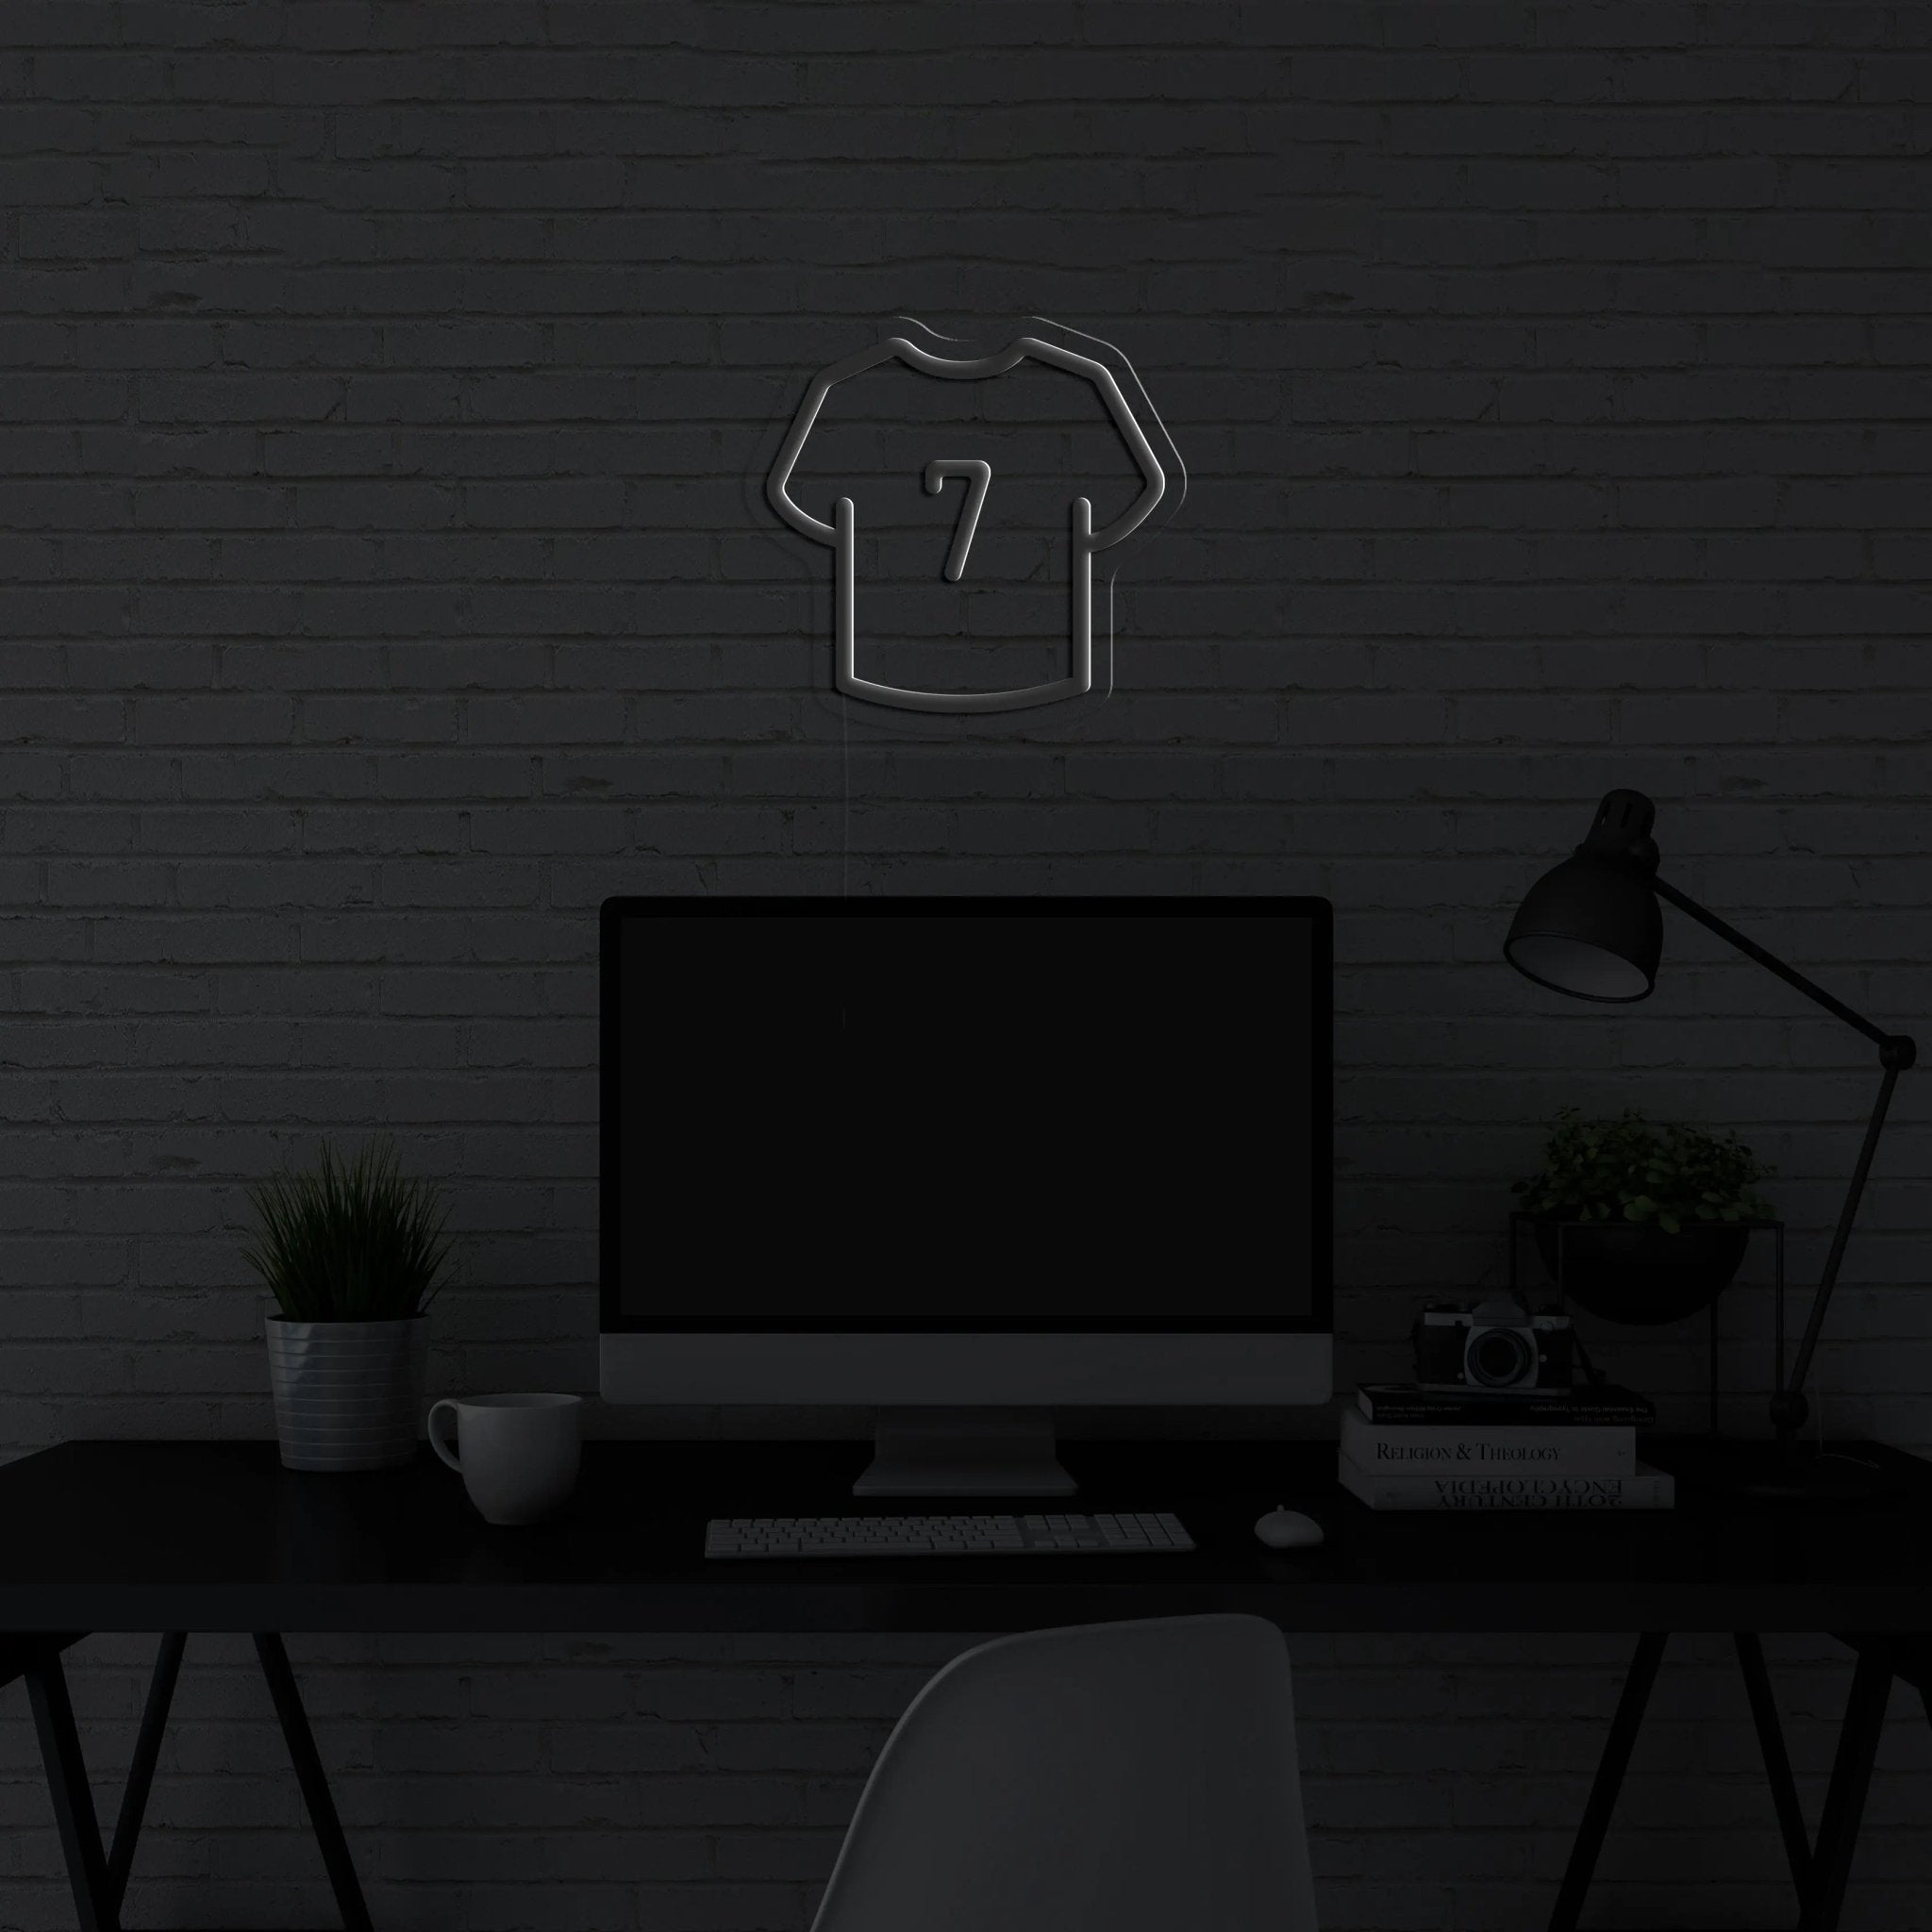 'Shirt nº7' LED Neon Sign - neonaffair